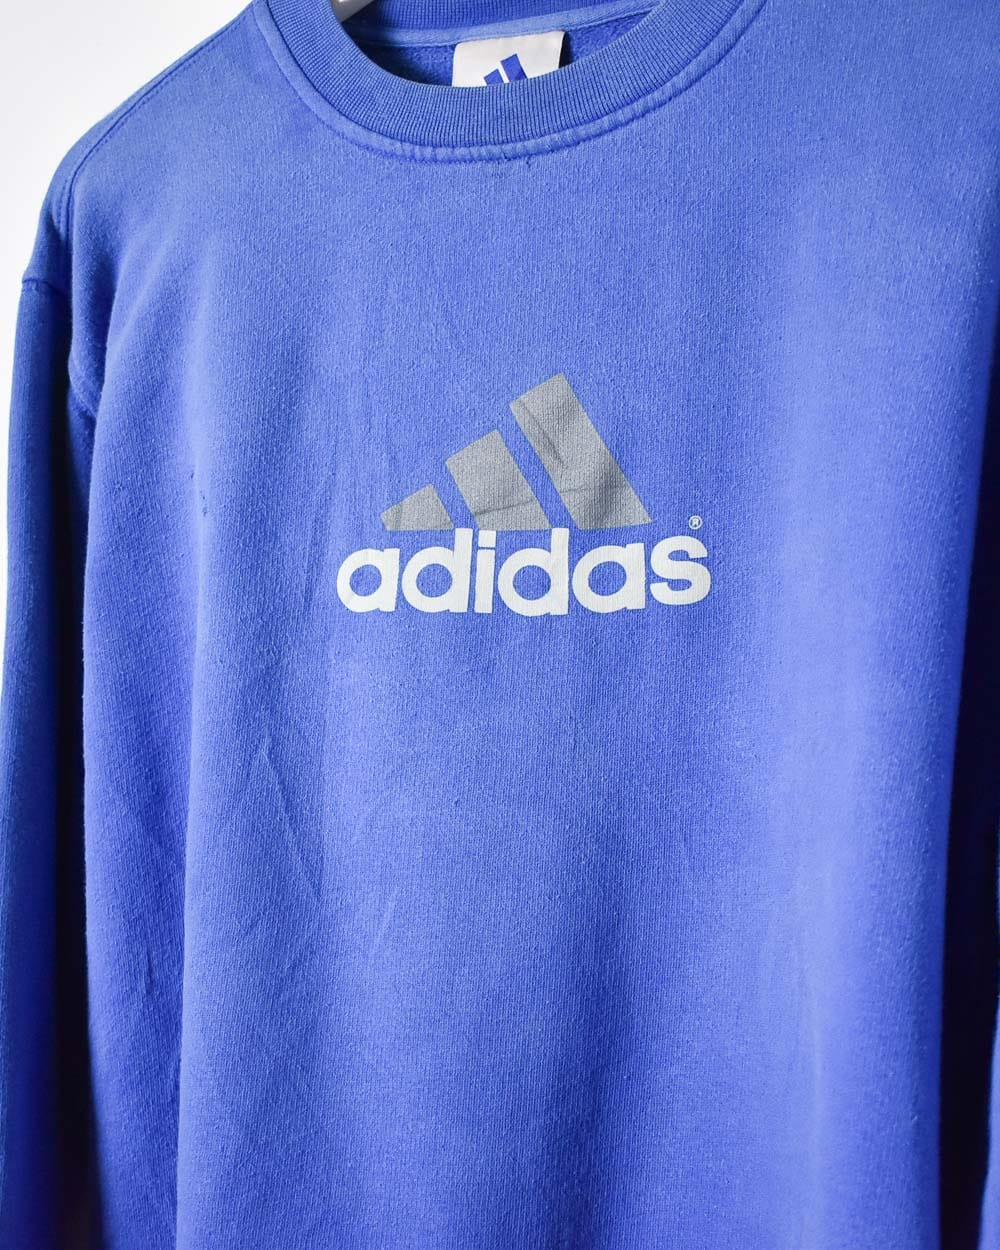 Blue Adidas Worn Sweatshirt - X-Small